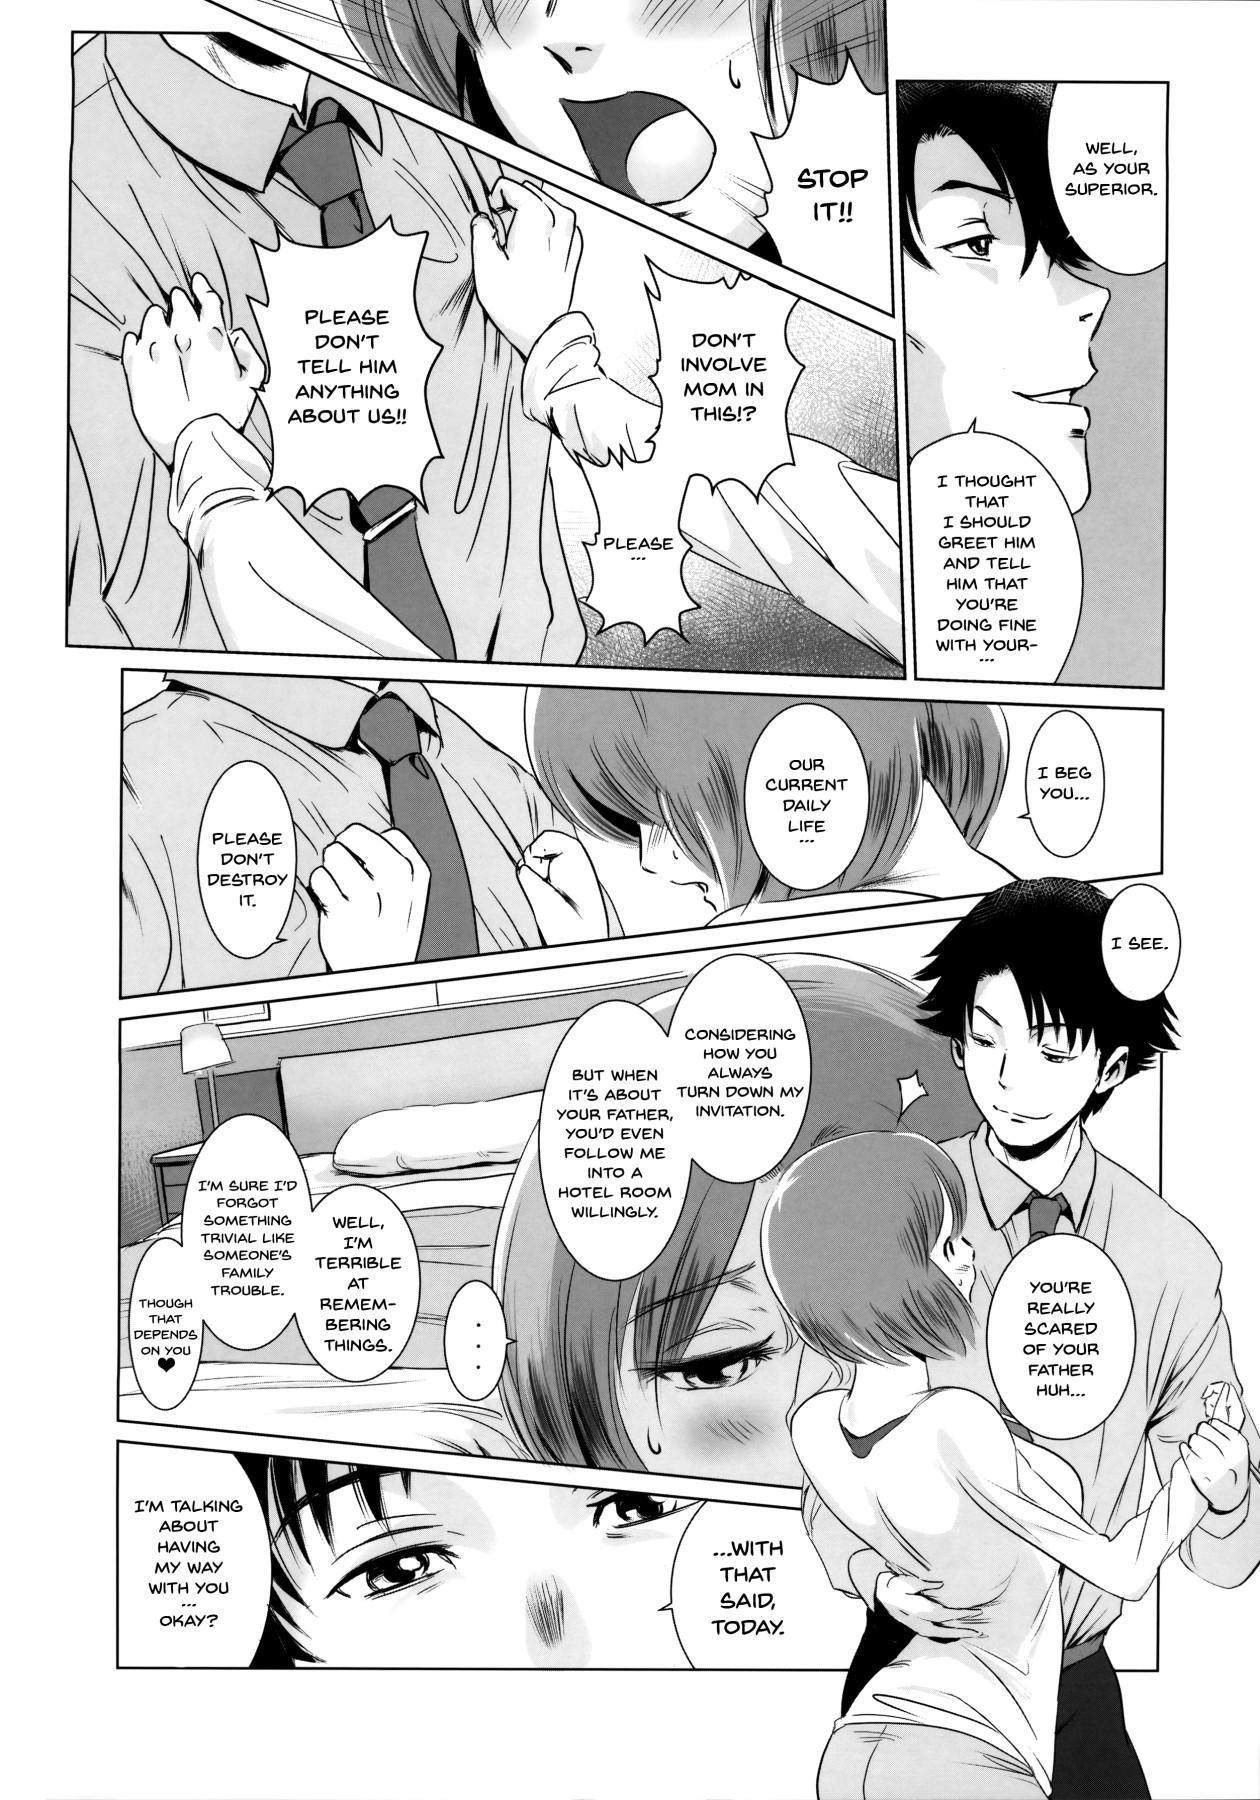 Korea Story of the 'N' Situation - Situation#1 Kyouhaku - Original Culo - Page 12